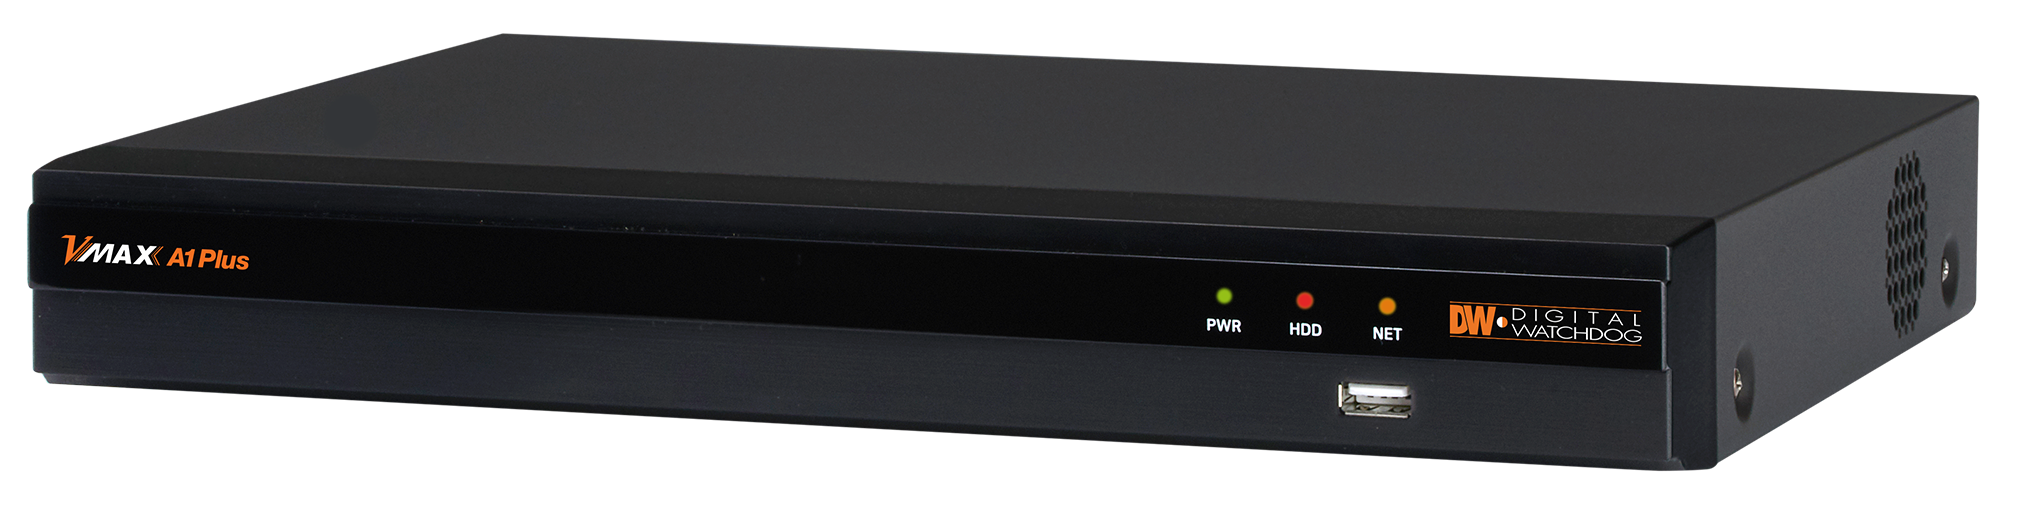 Digital Watchdog DW-VA1P46T  UHDoC - DVR 4ch 4 Channel Universal HD Over Coax DVR